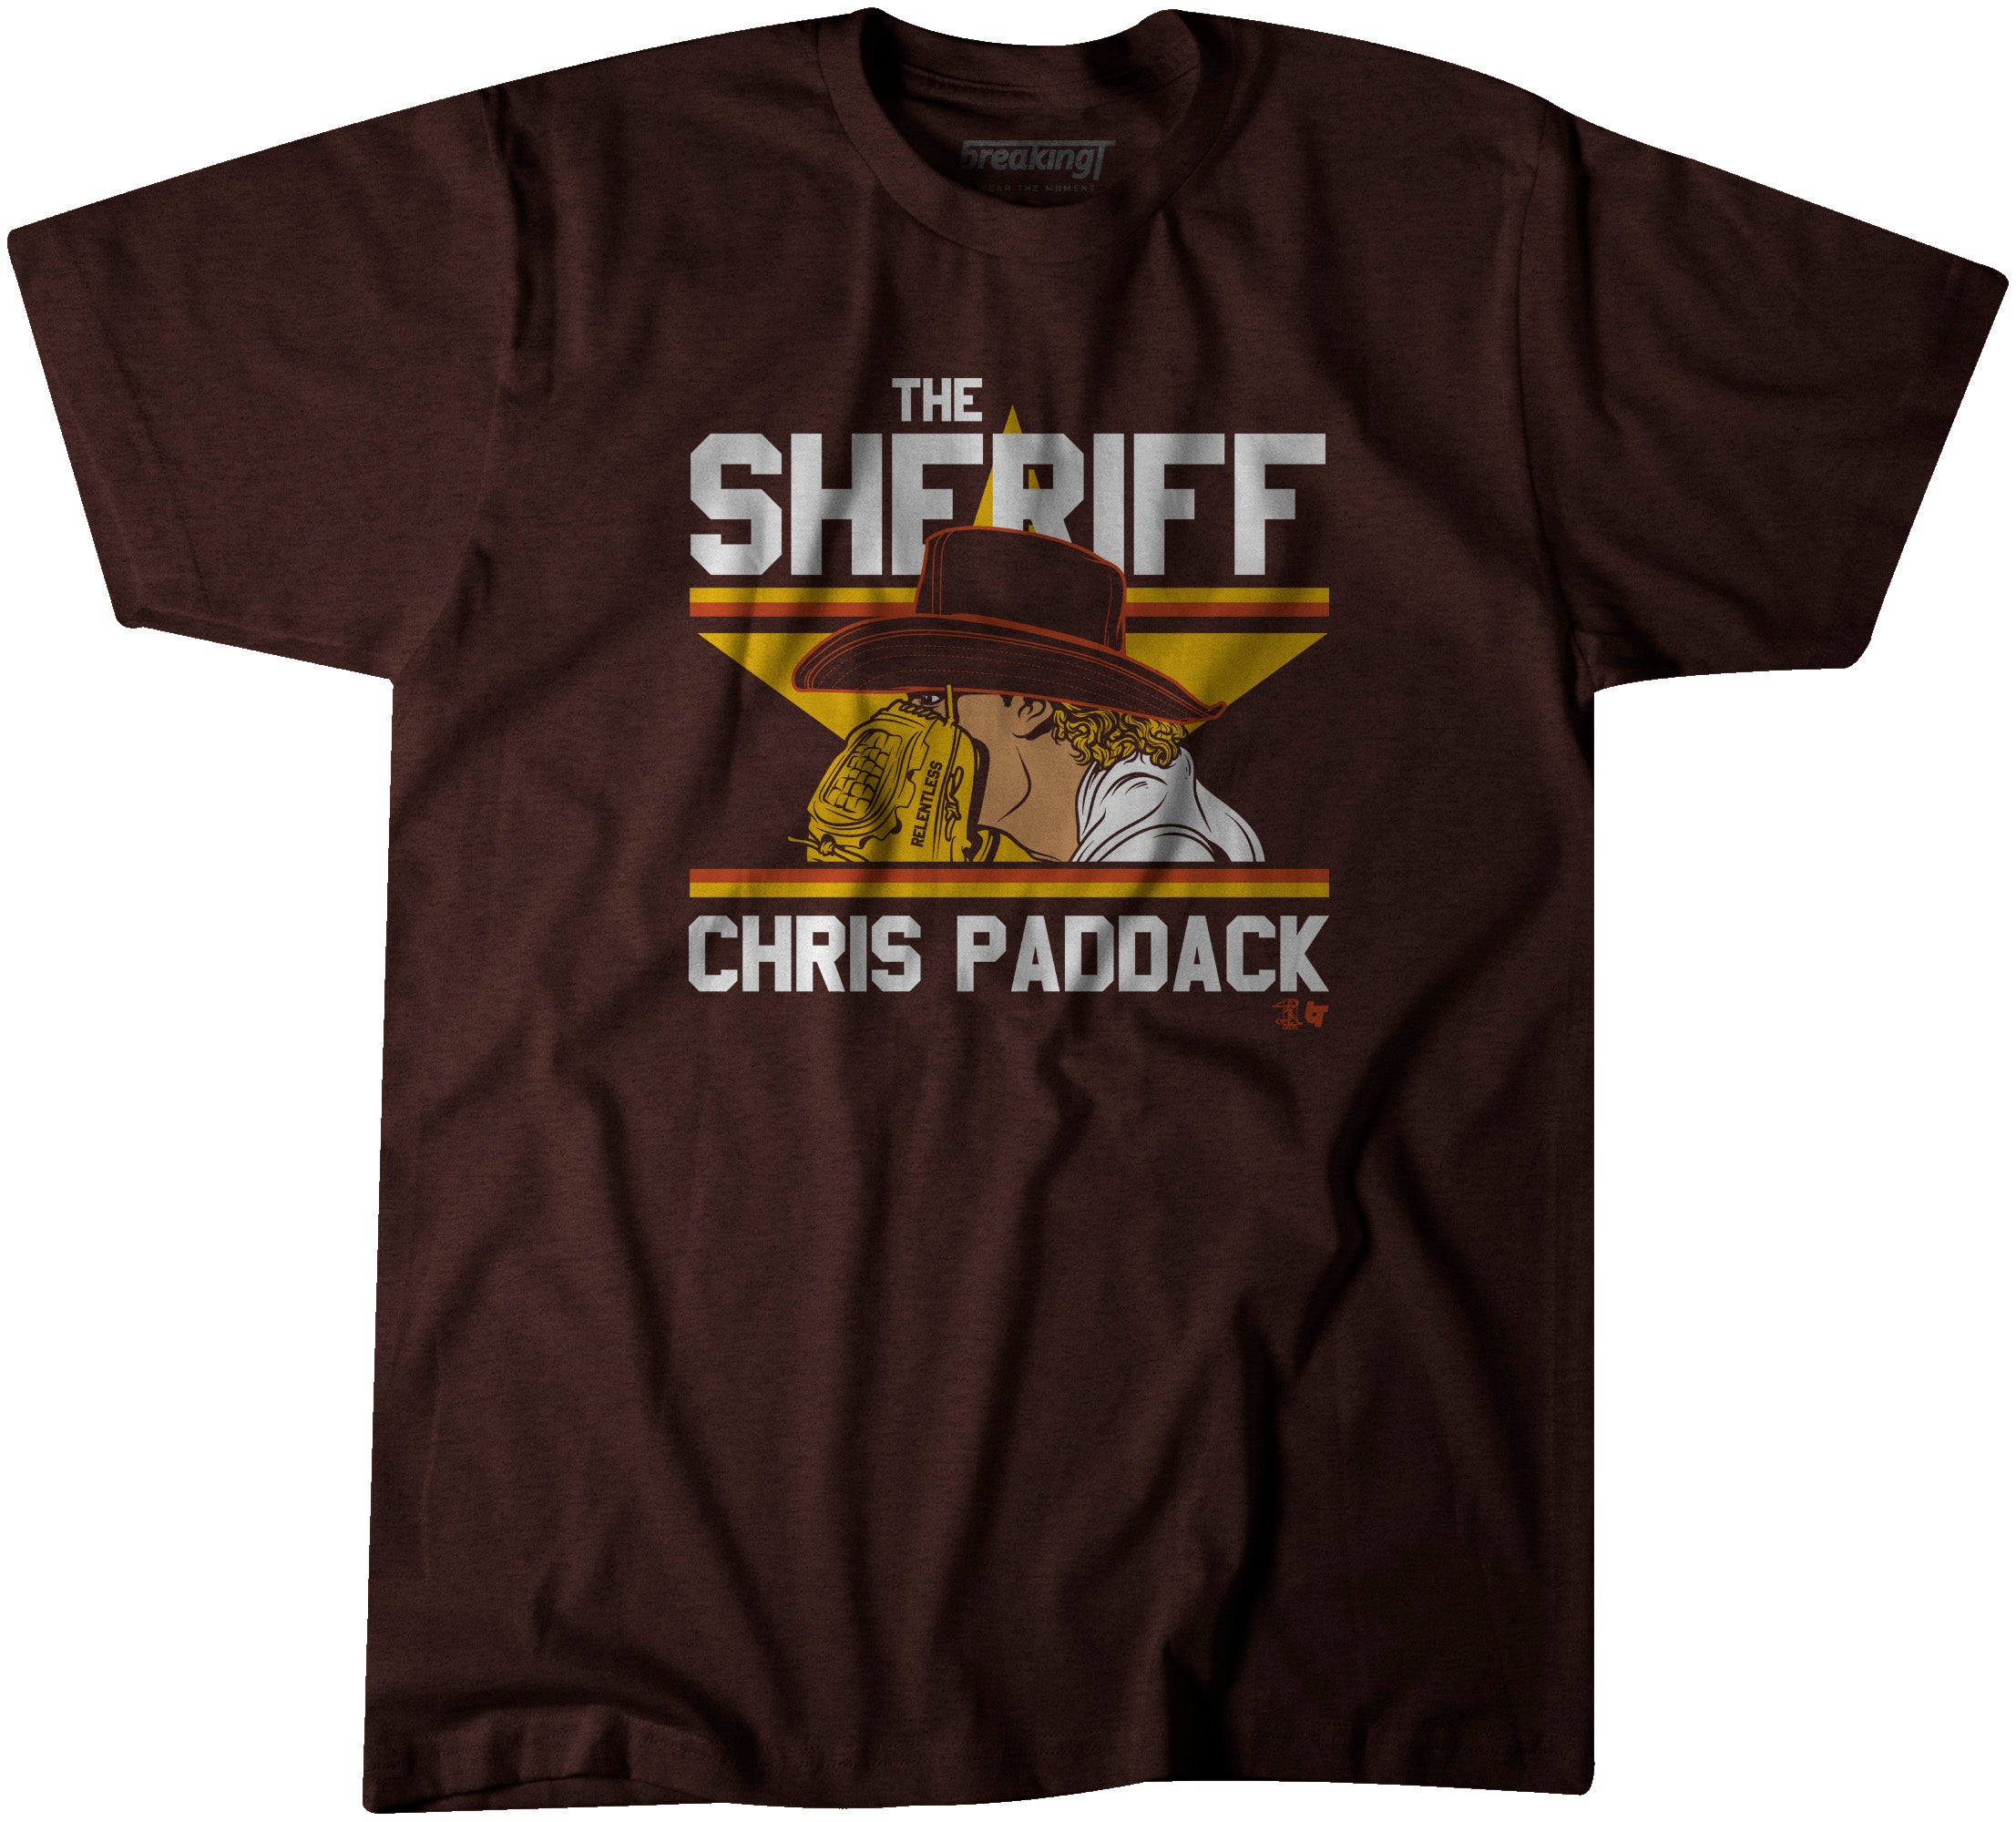 Chris Paddack Shirt - The Sheriff, San Diego - BreakingT